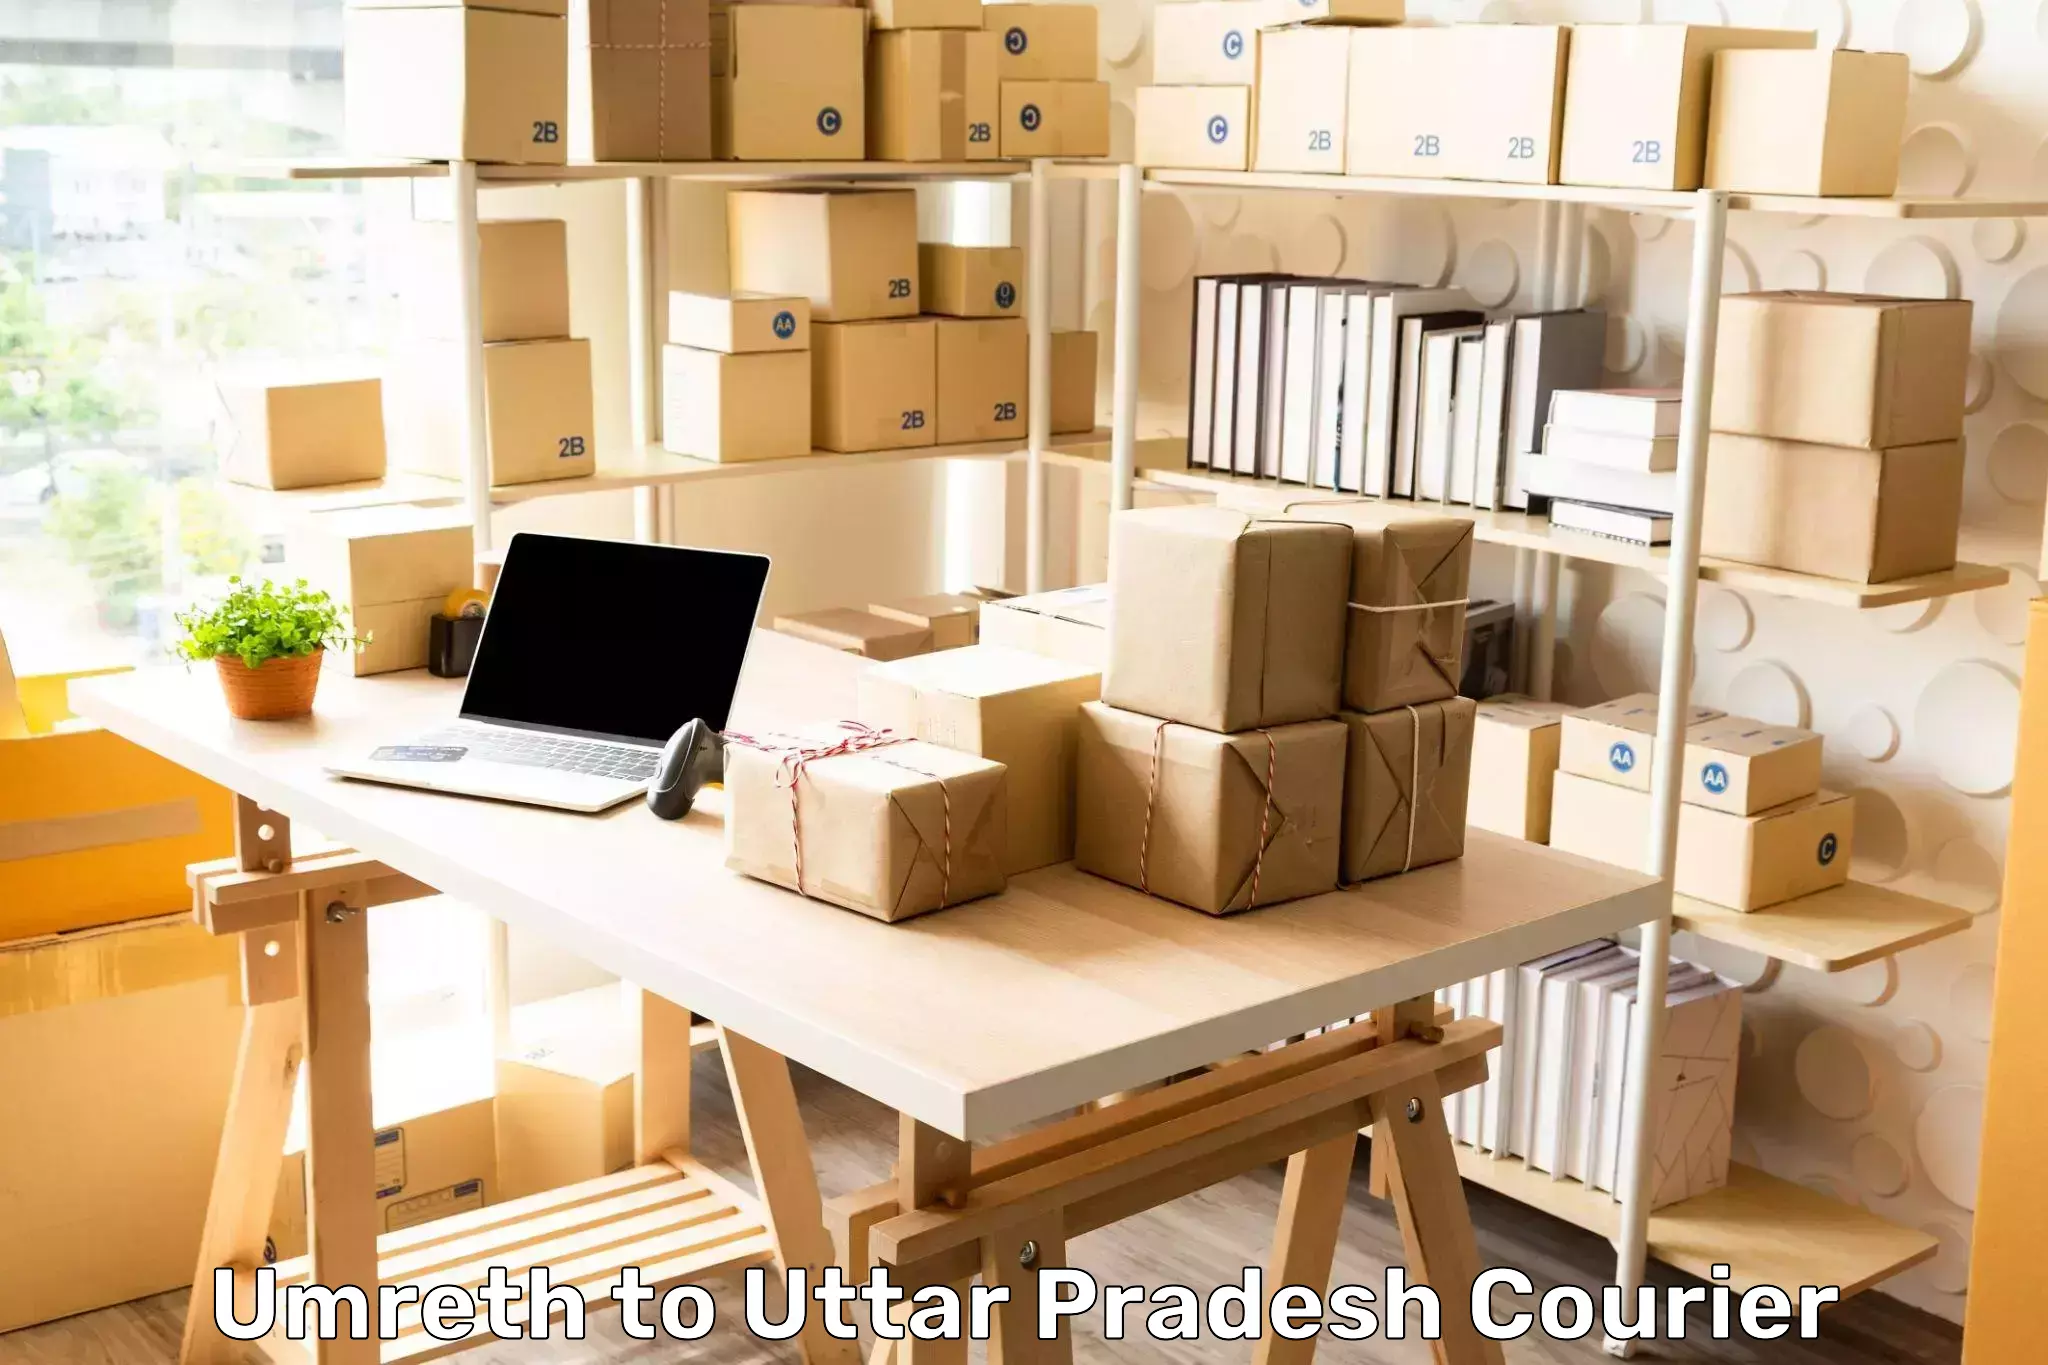 Air courier services in Umreth to Uttar Pradesh